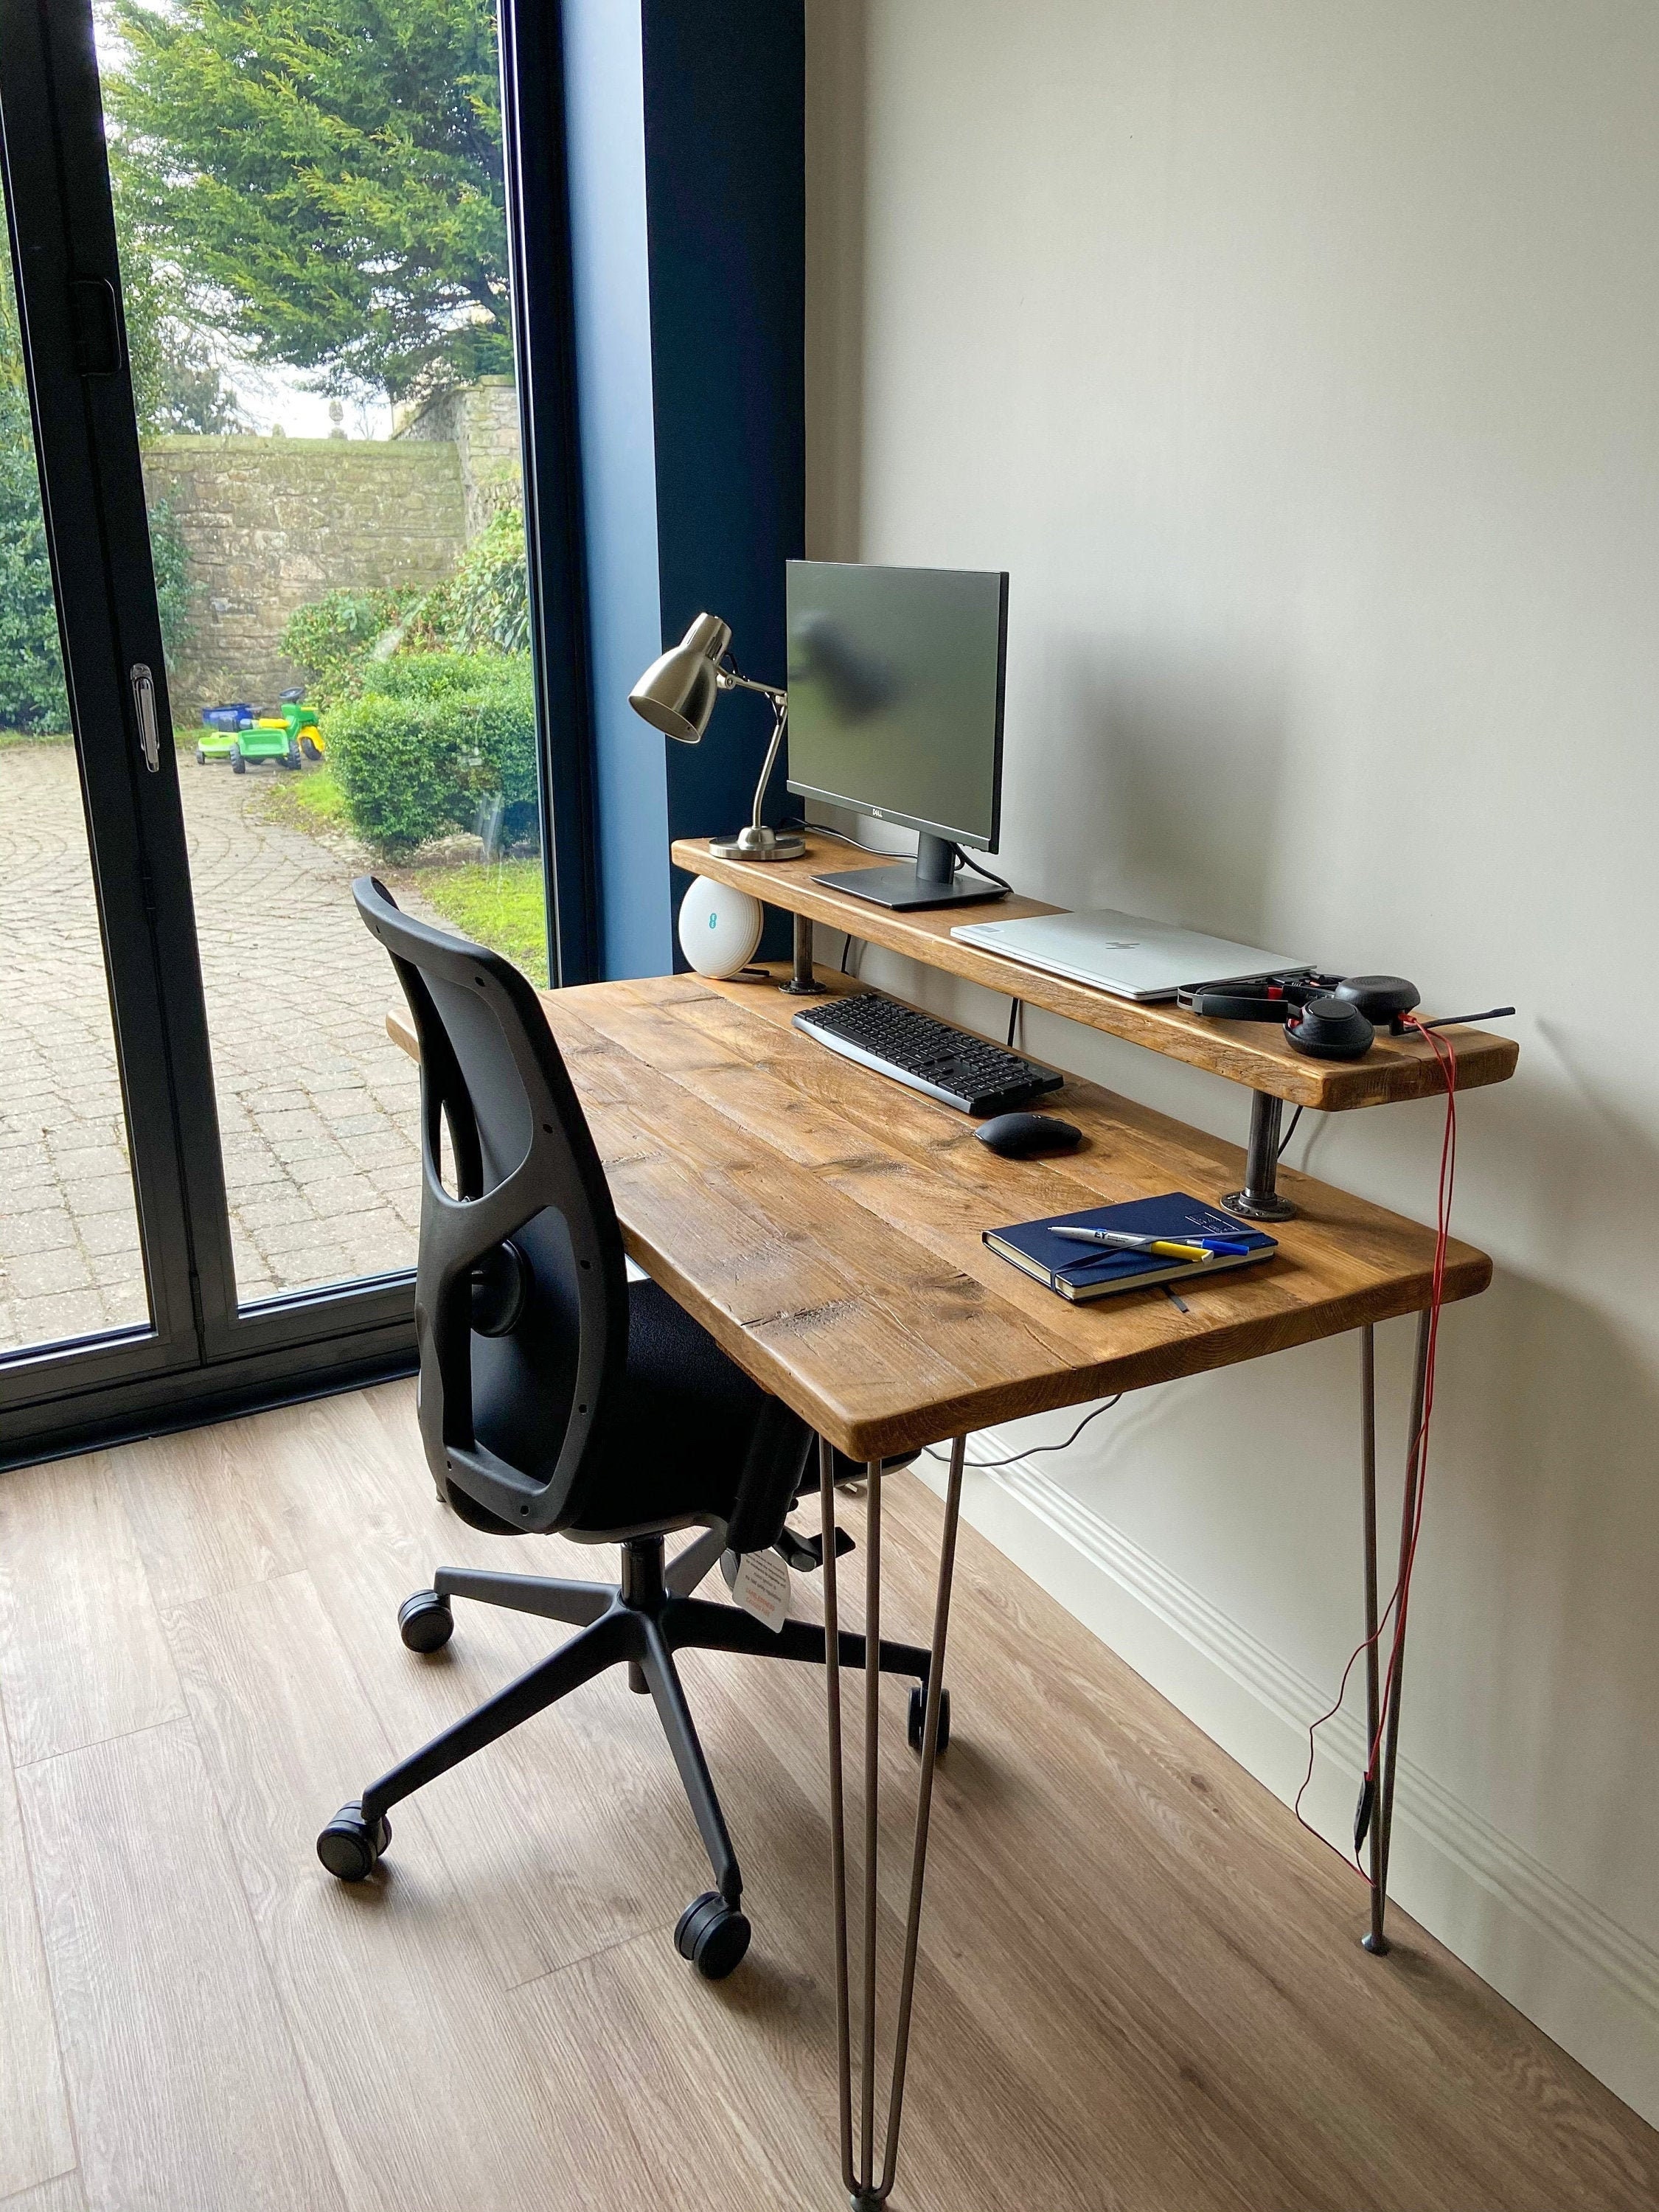 Soporte para 2 monitores - Repisa para escritorio en madera